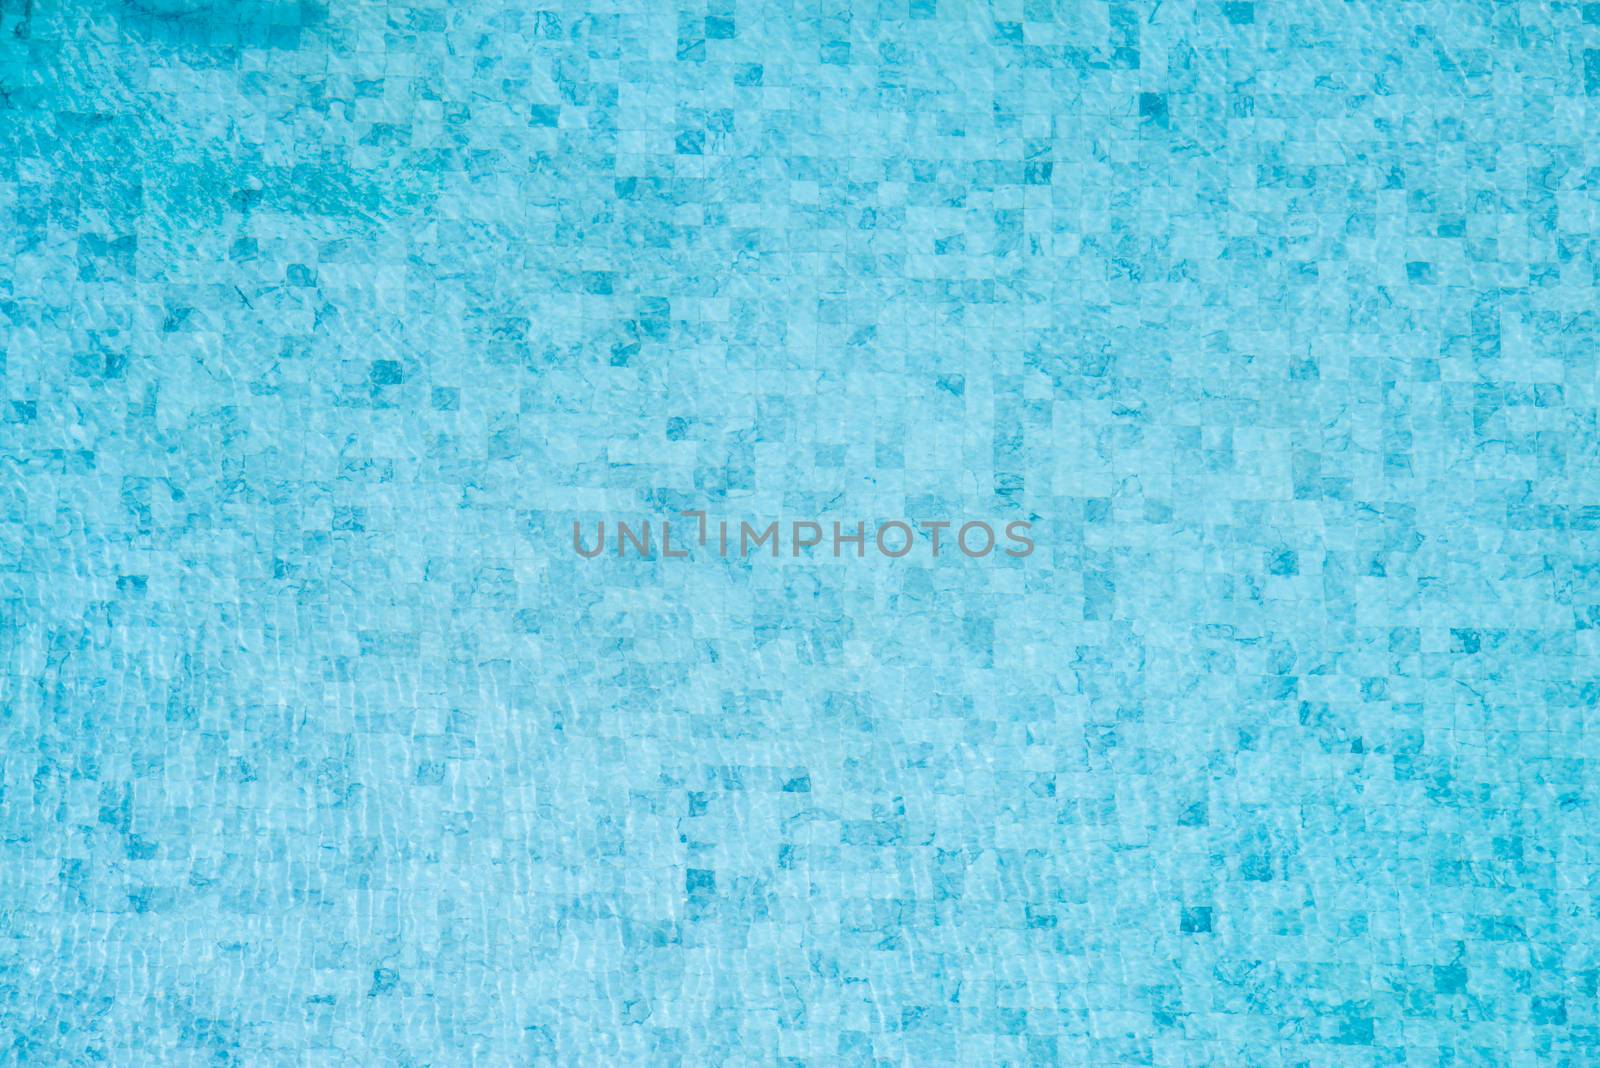 Swimming pool floor by antpkr